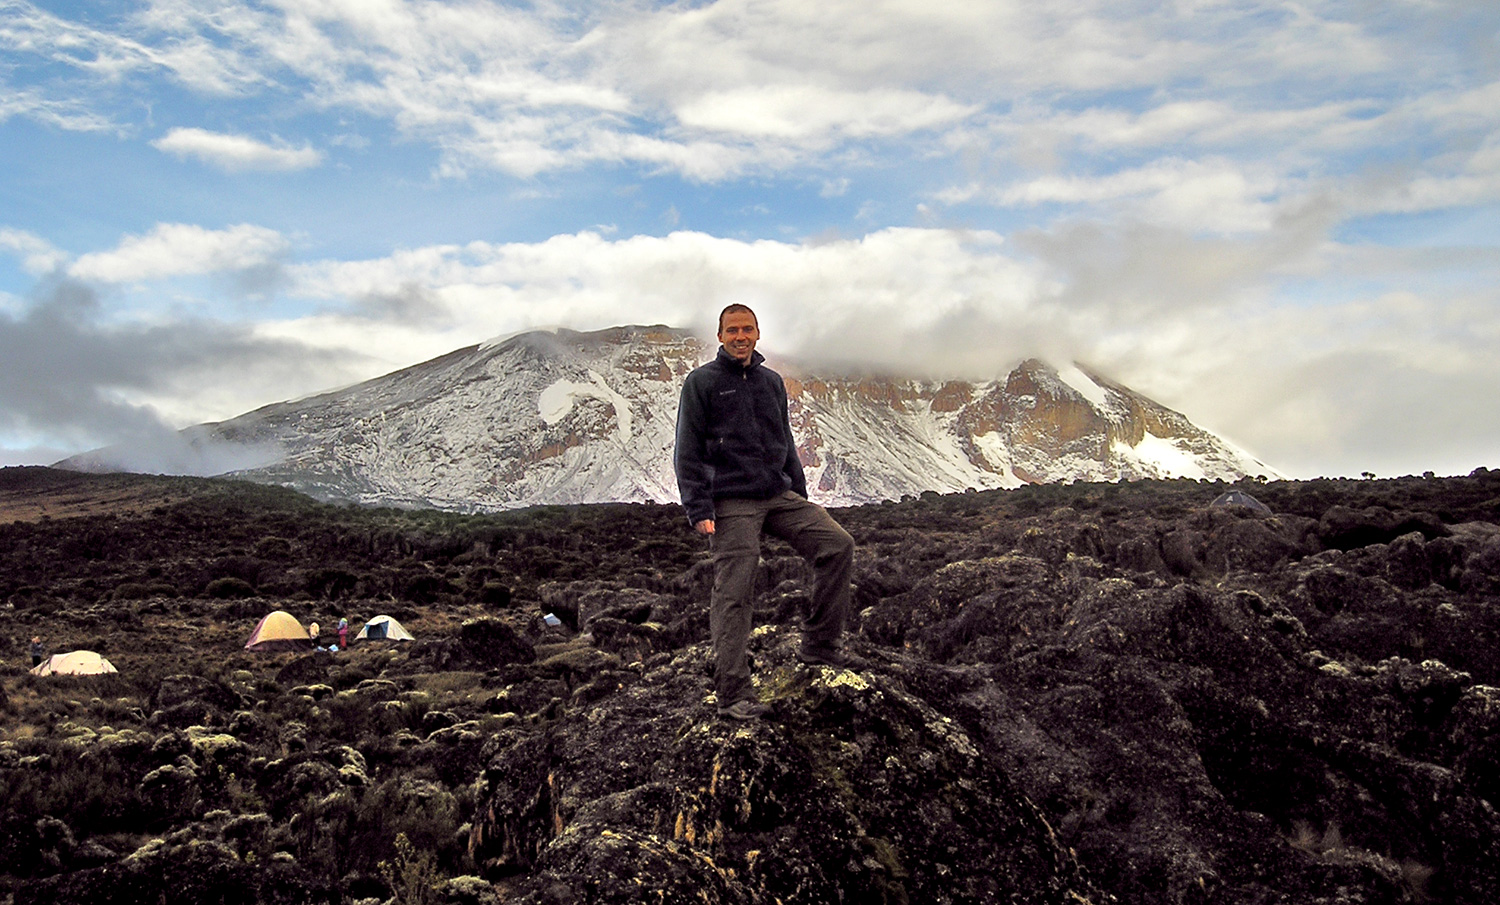 thomson safaris staffer paul shares Tips for Climbing Kilimanjaro